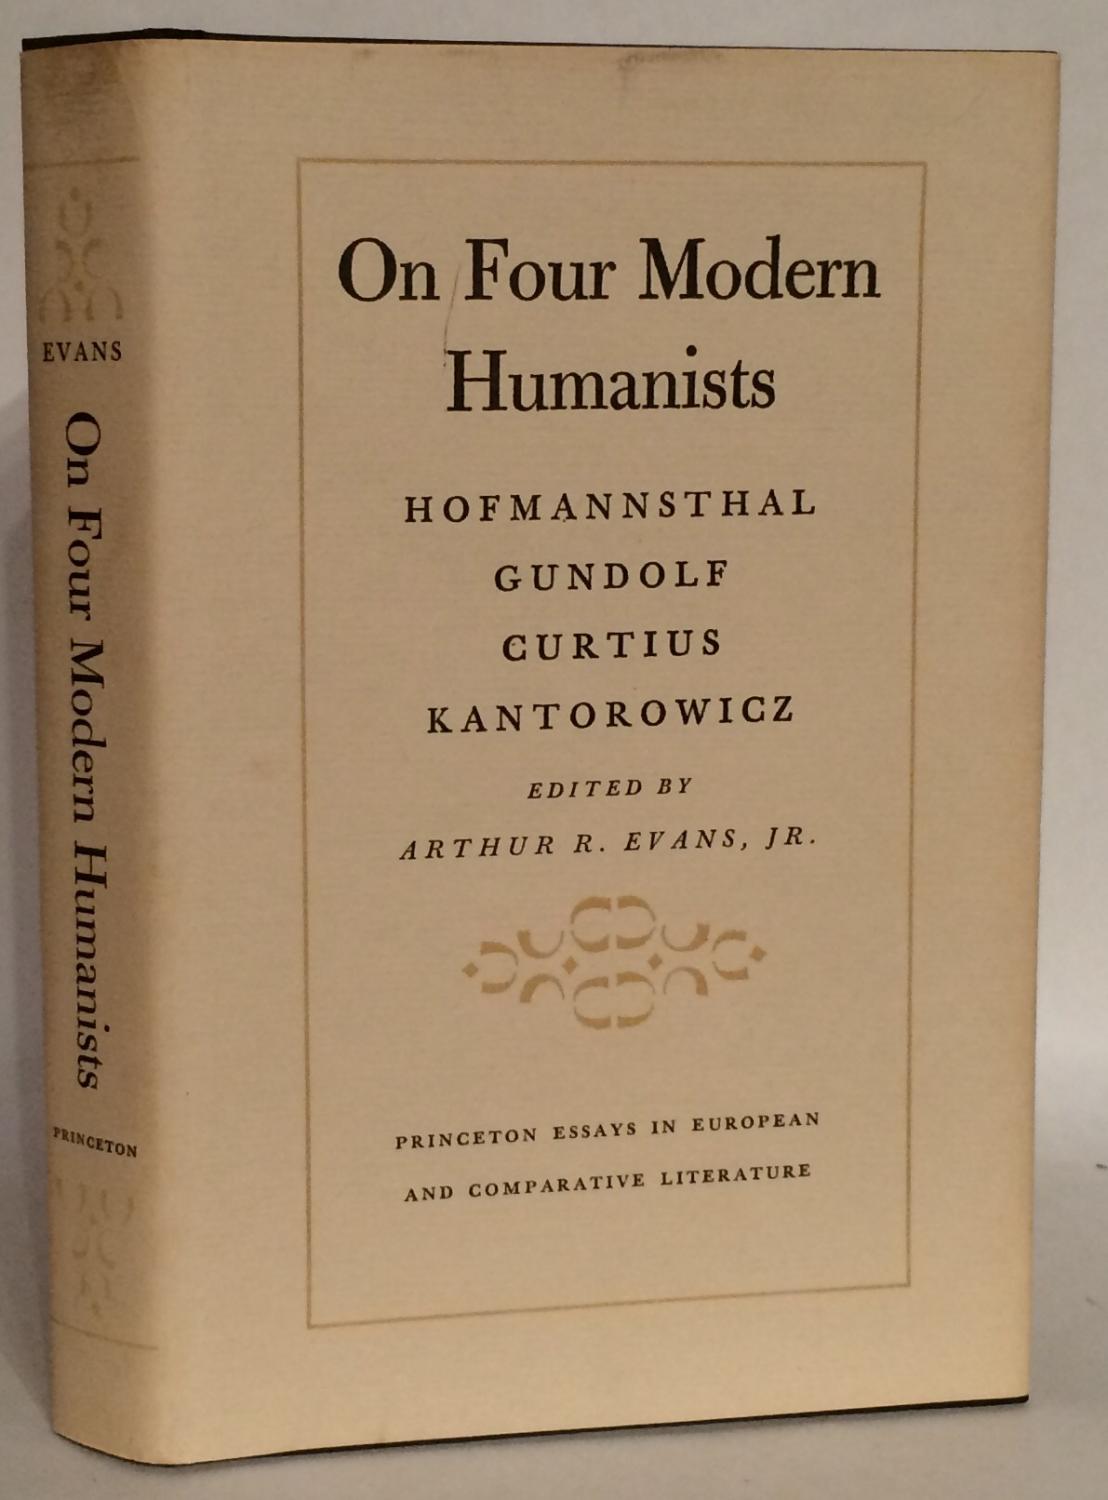 On Four Modern Humanists. Hofmannsthal, Gundolf, Curtius, Kantorowicz. - Evans, Arthur R., Jr., Ed.